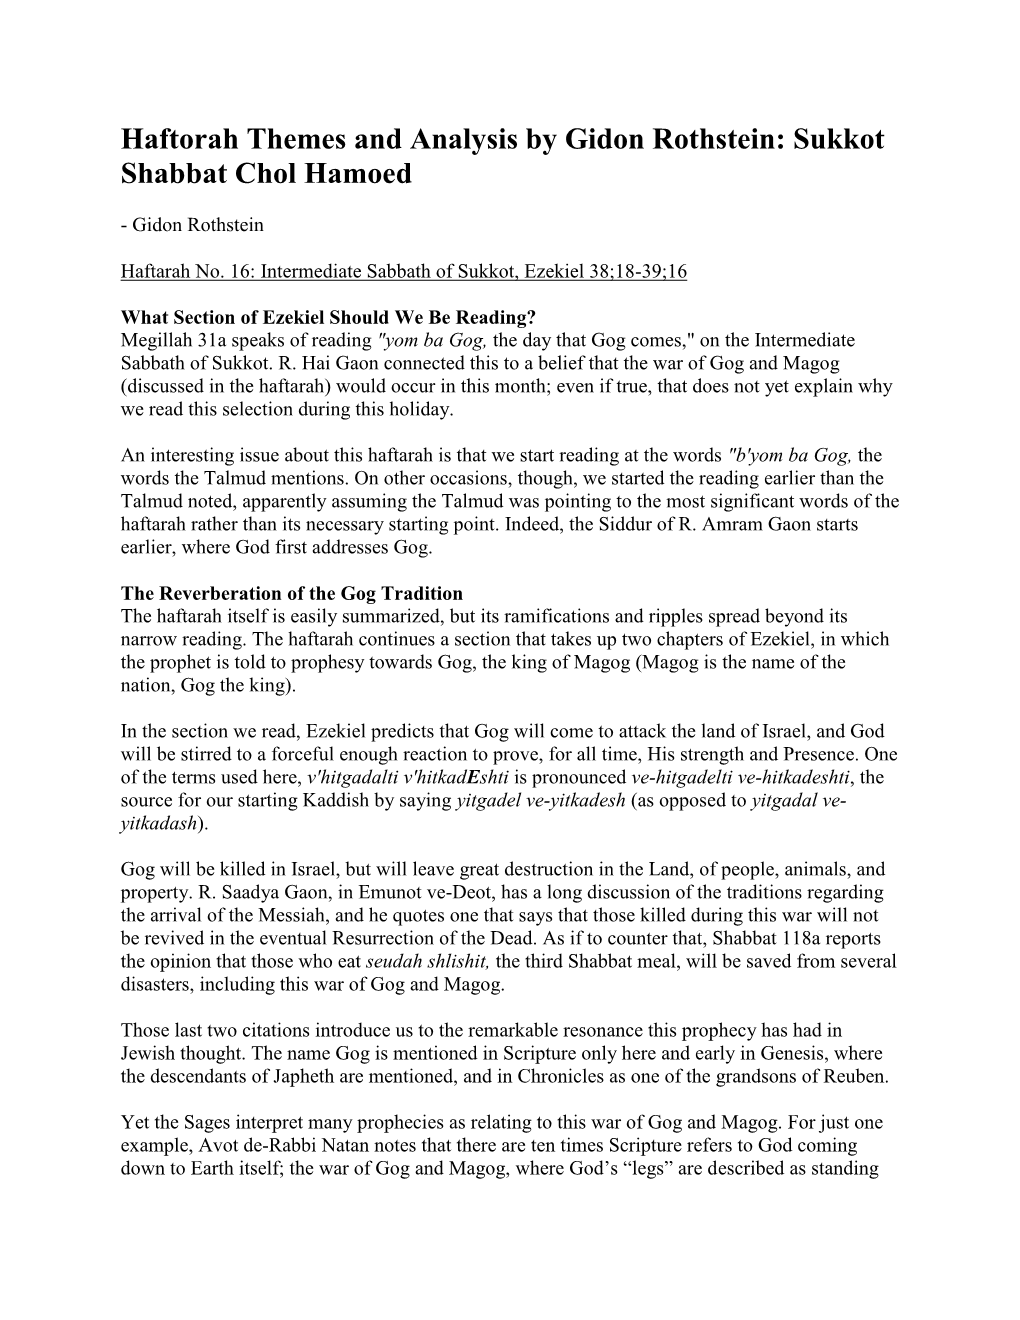 Haftorah Themes and Analysis by Gidon Rothstein: Sukkot Shabbat Chol Hamoed